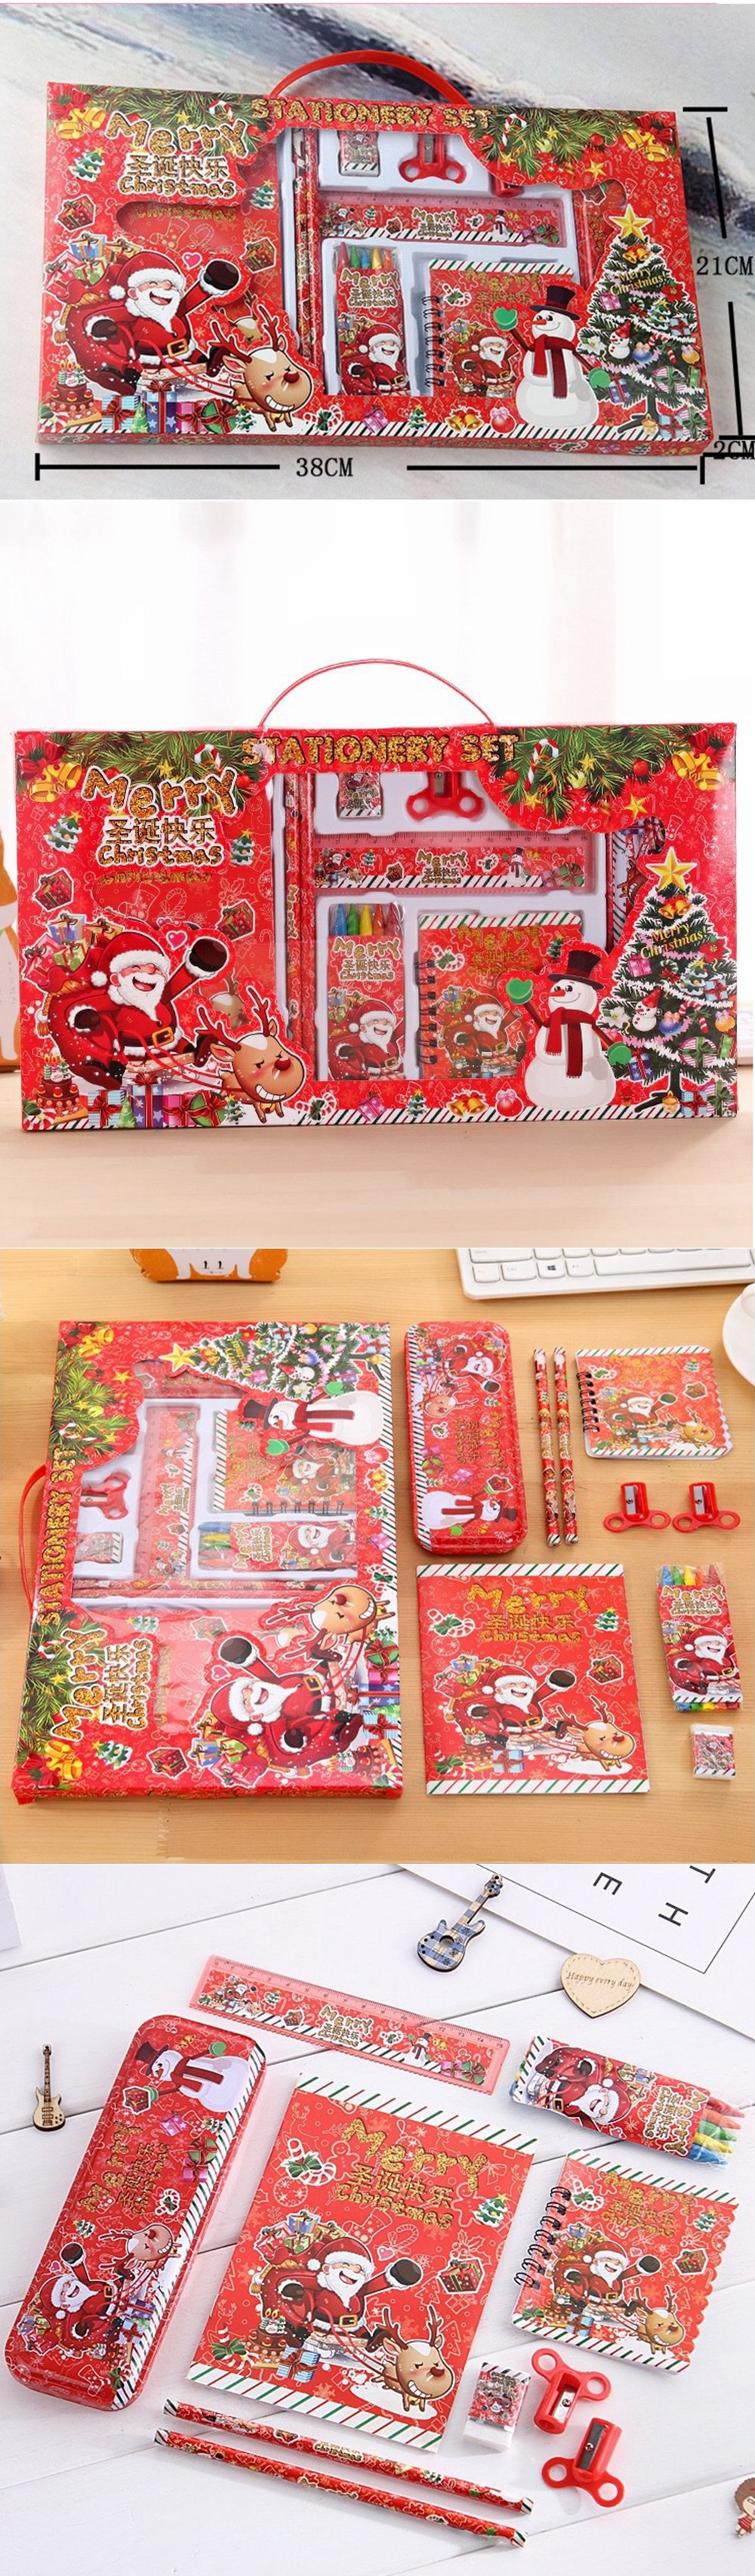 Christmas-Stationery-Set-Pencil-Eraser-Ruler-Sharpener-Pencil-case-Primary-School-Holiday-Gift-1384037-1